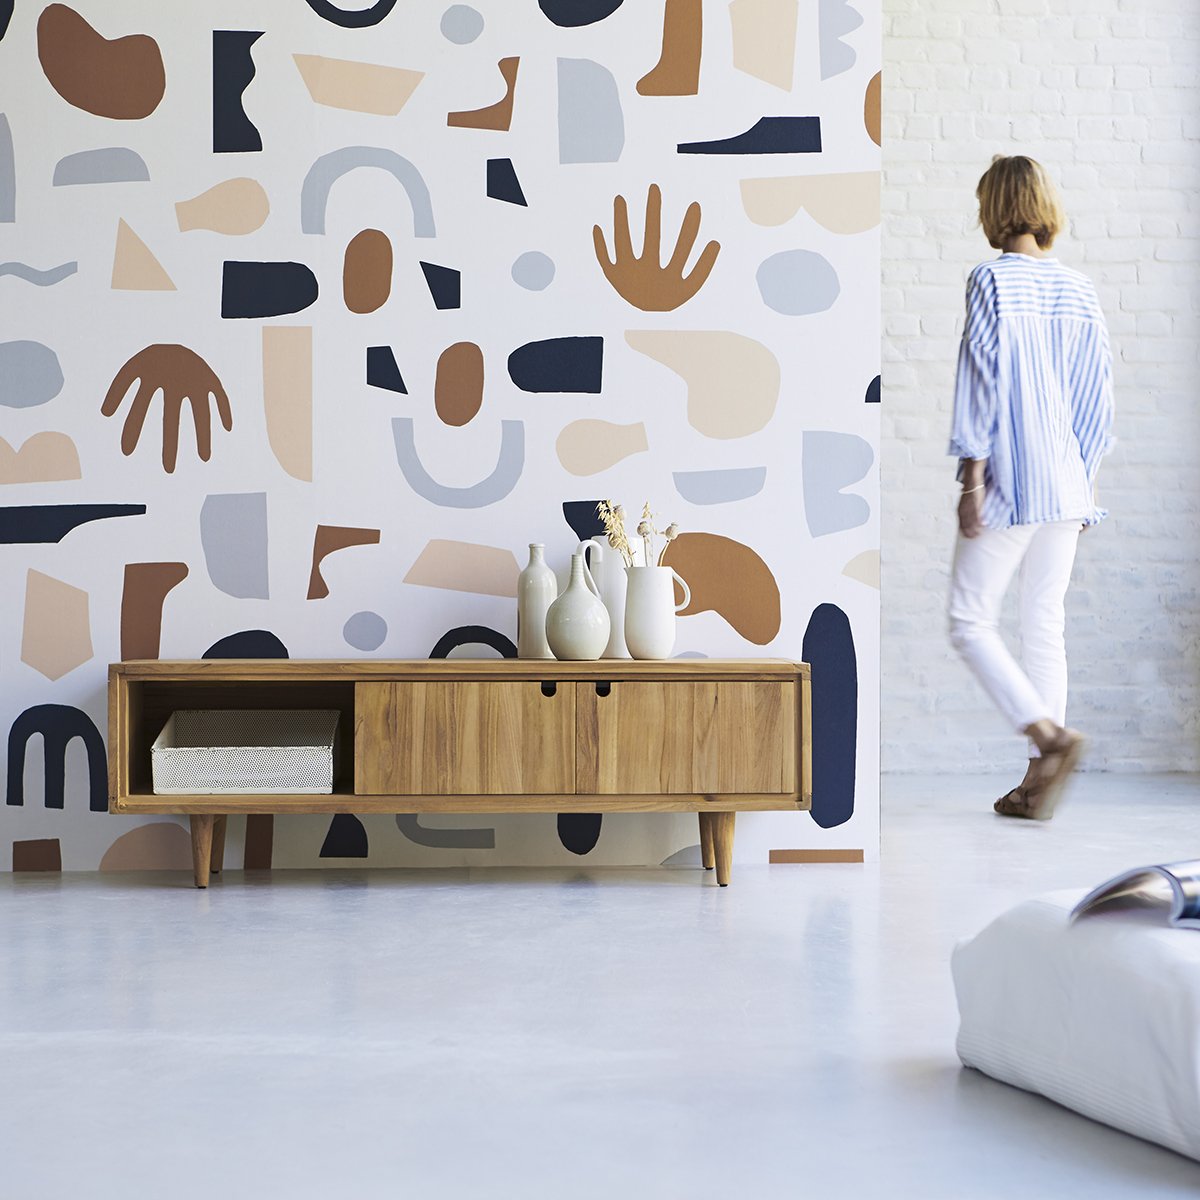 Read more about the article „Mural Wallpaper“ Die Tapete – Ein Comeback, das Akzente setzt